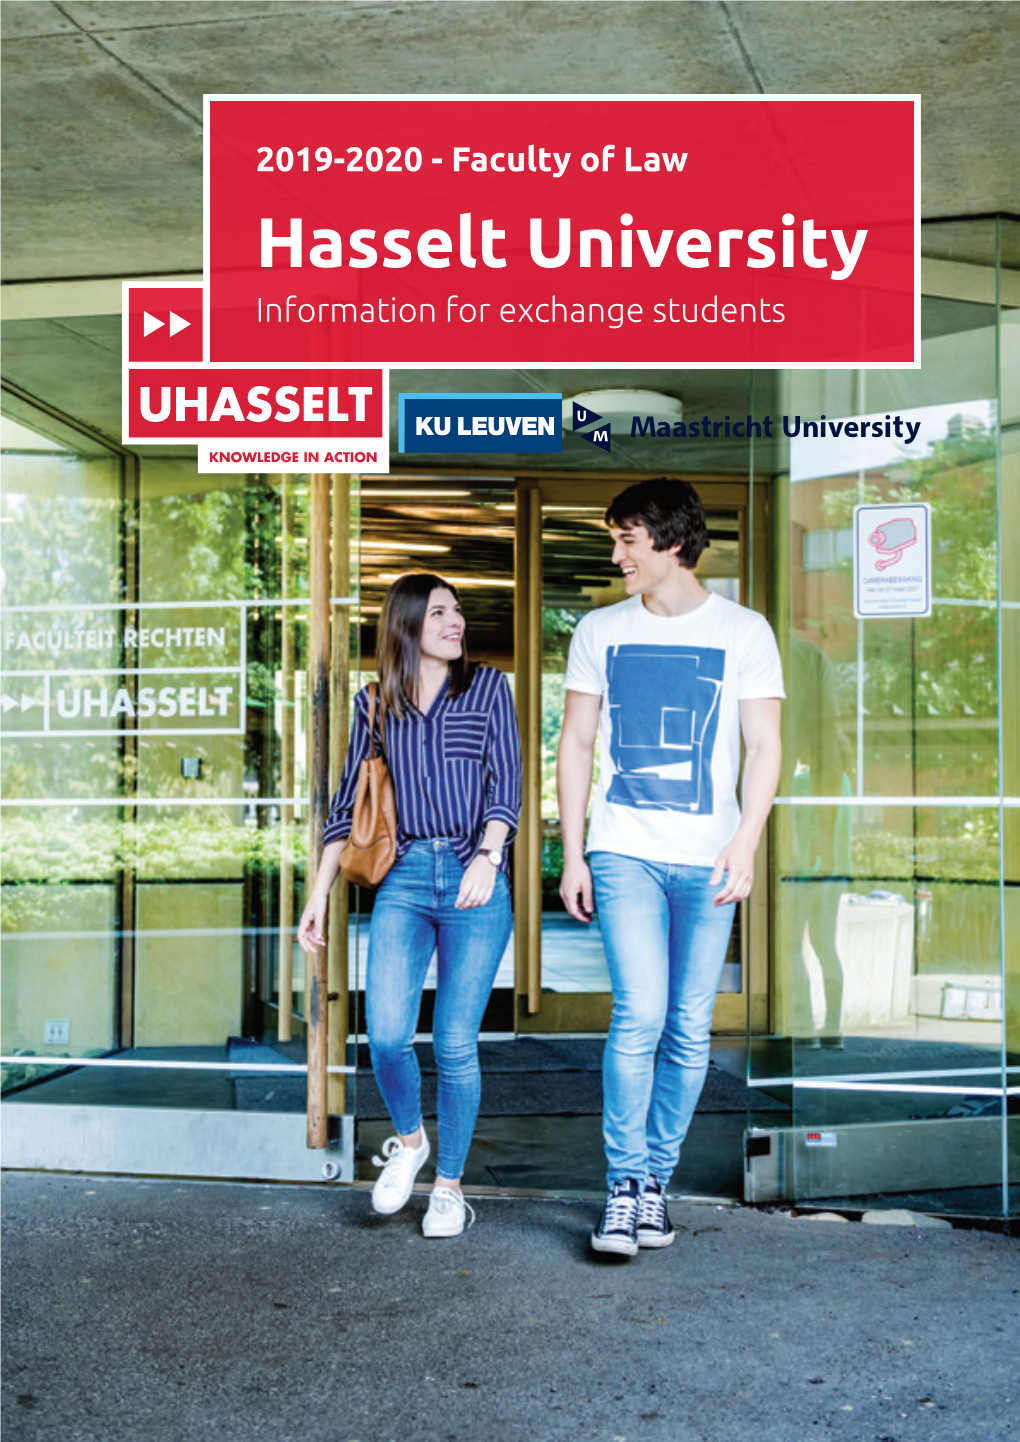 Hasselt University Information for Exchange Students 2 HASSELT UNIVERSITY